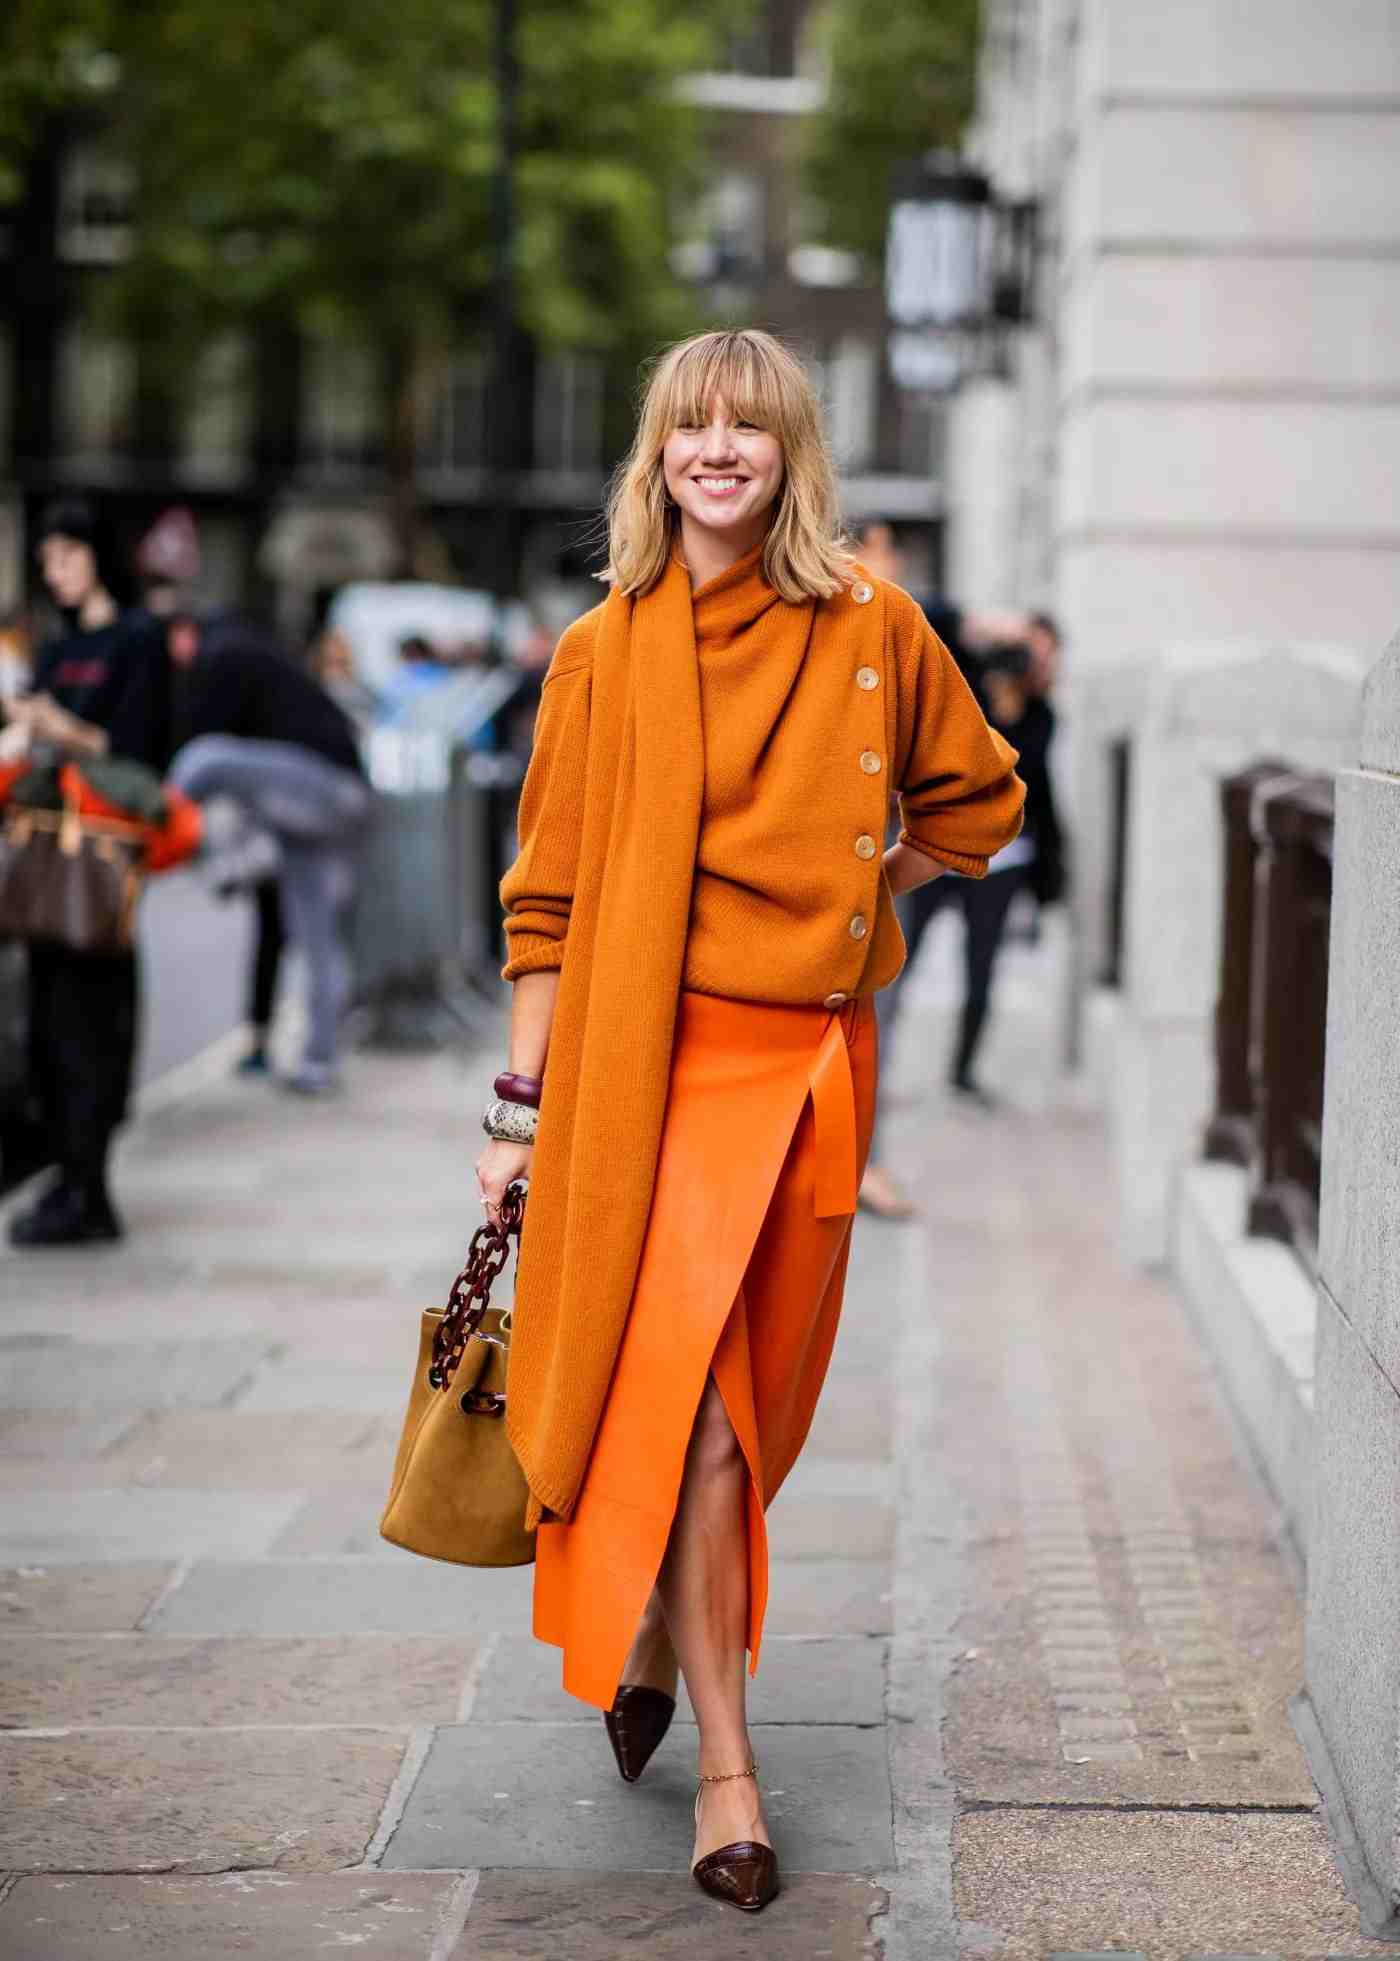 Lederrock Orange Strickpullover Neon Trend Farben Wildleder Handtasche Outfit Winter